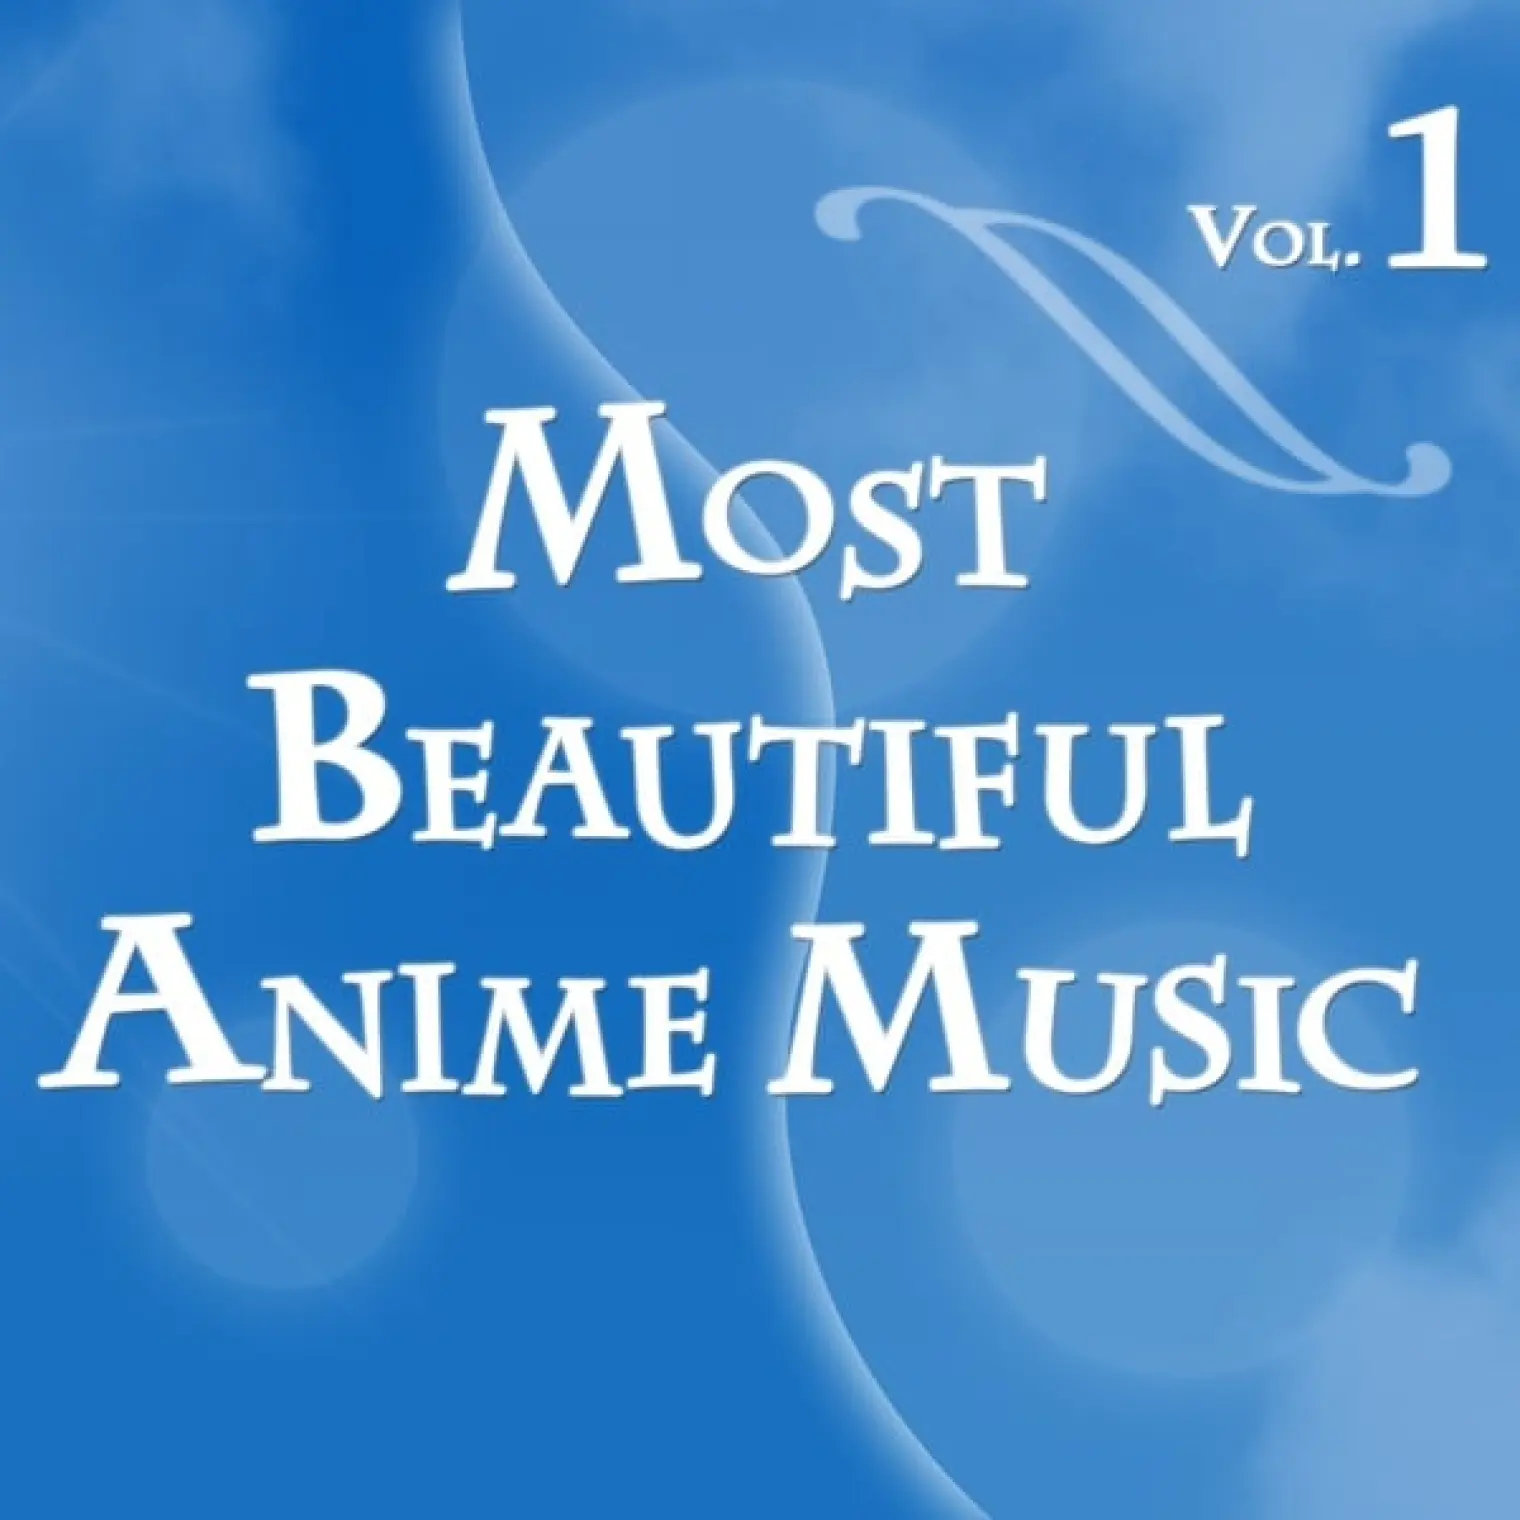 Most Beautiful Anime Music, Vol.1 -  RMaster 